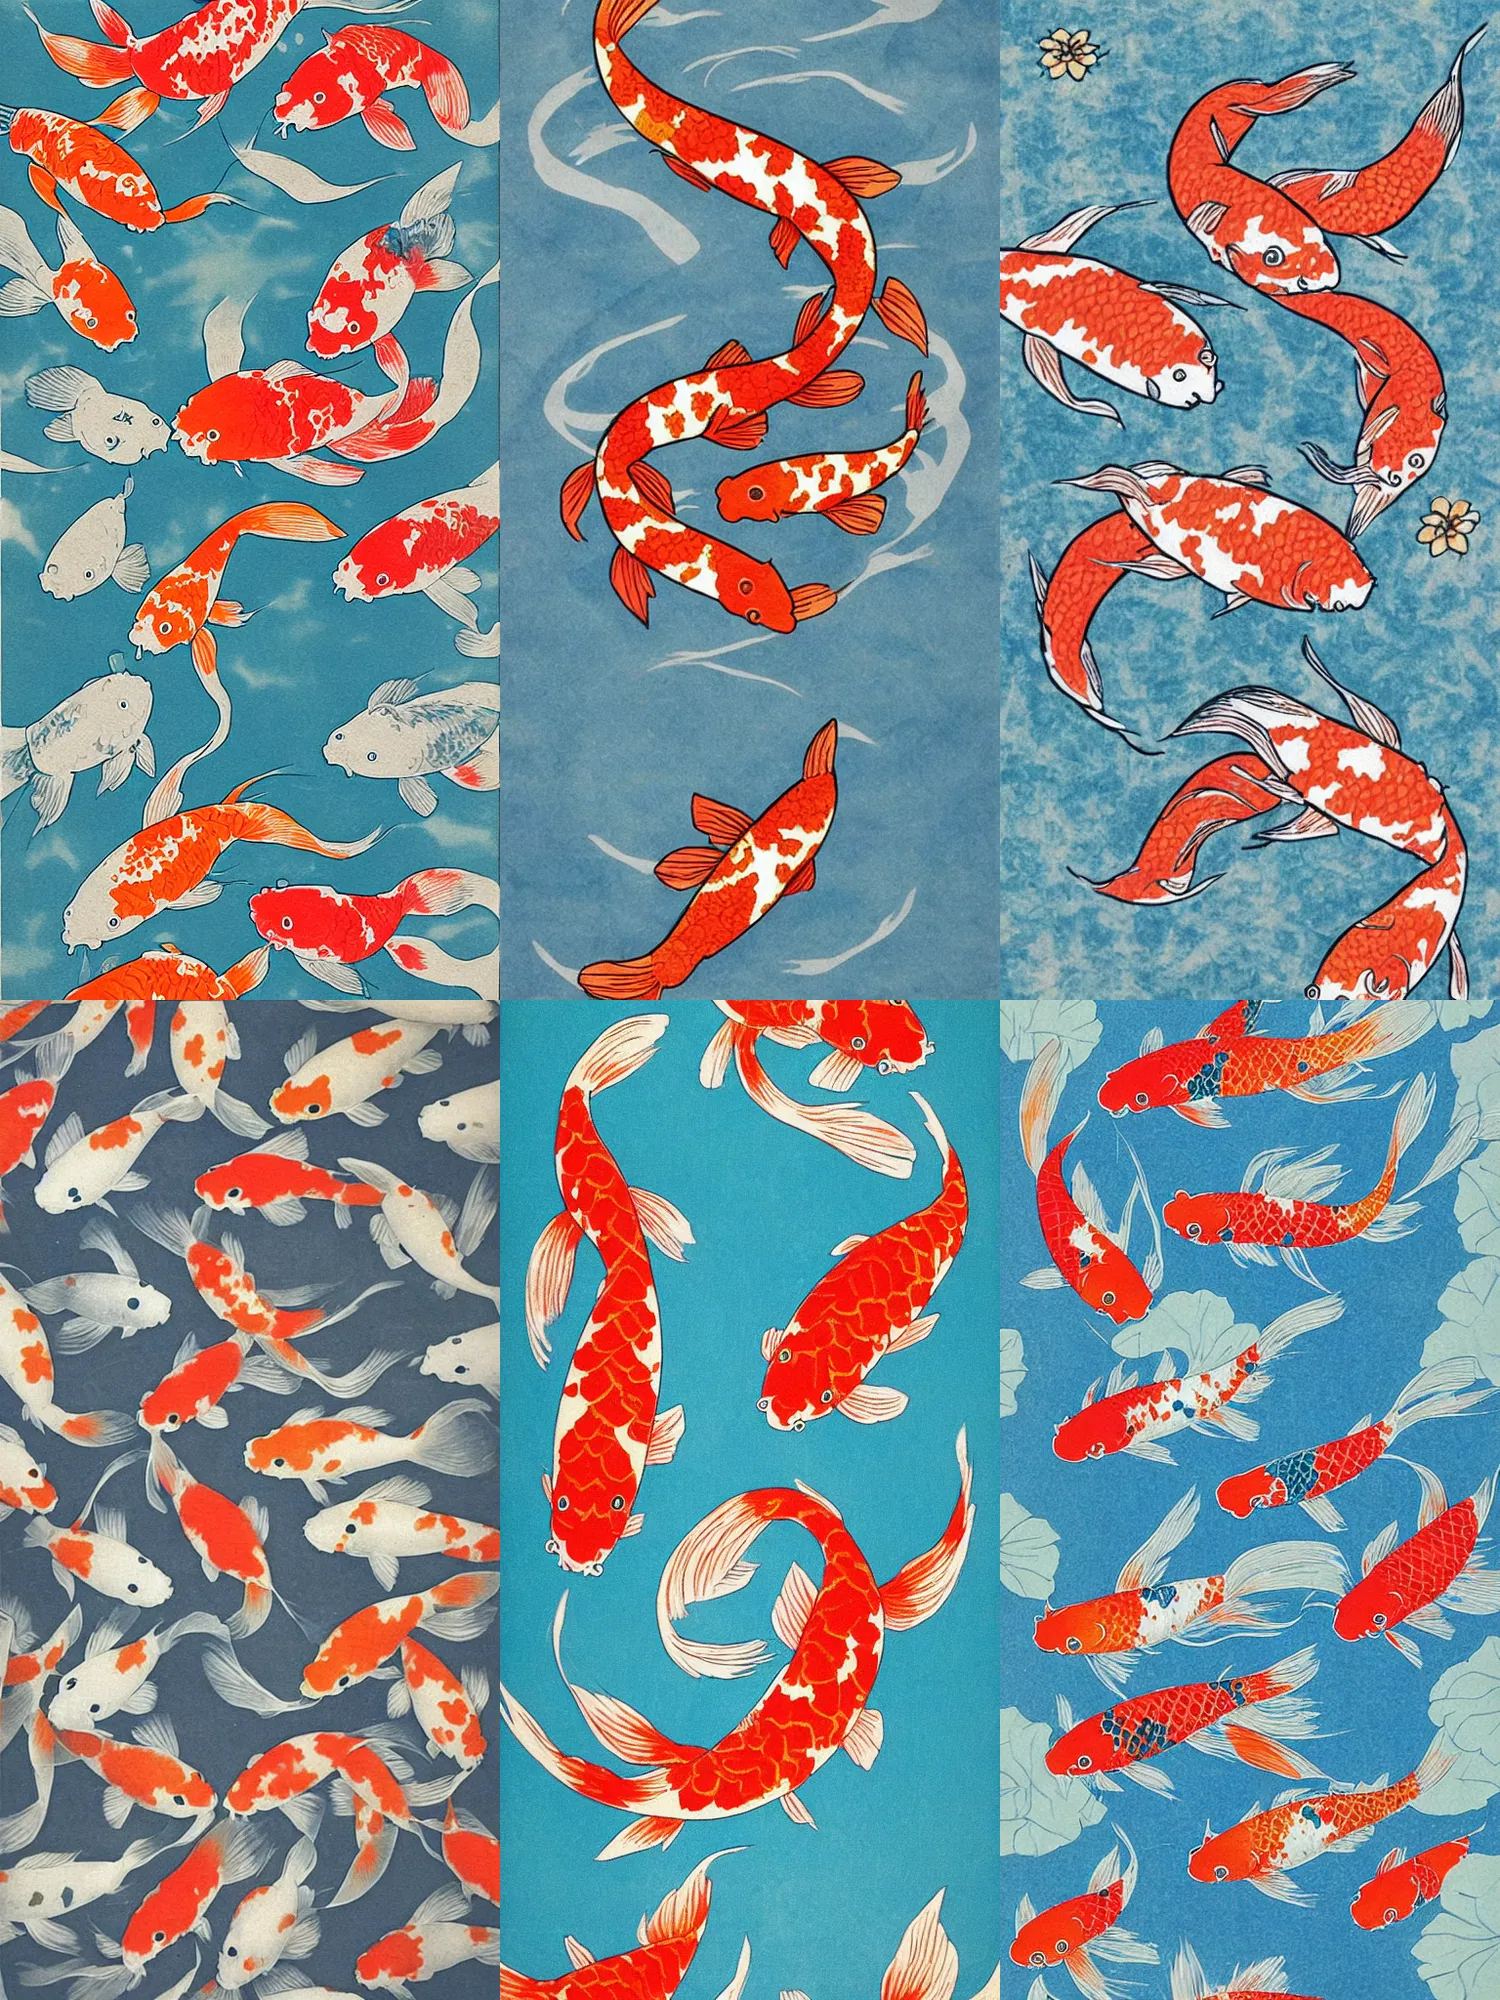 Prompt: “Japanese koi fish prints”